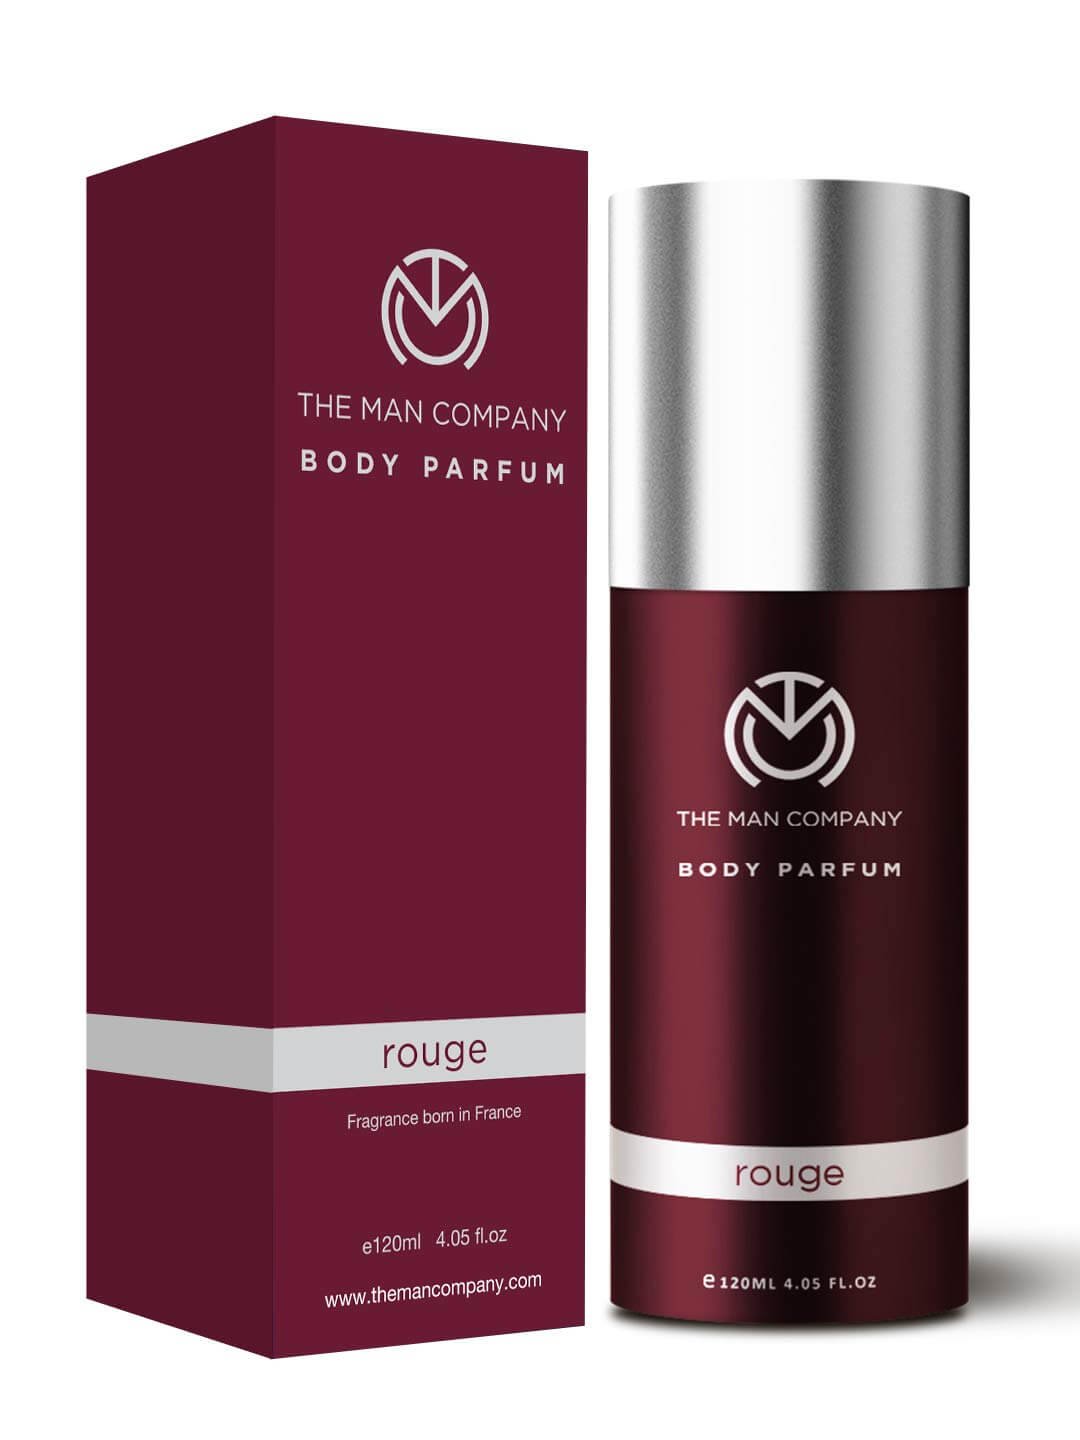 The Man Company Body Perfume For Men - Rouge  No Gas Deodorant  Body Spray For Men  Long Lasting Fragrance -120ml